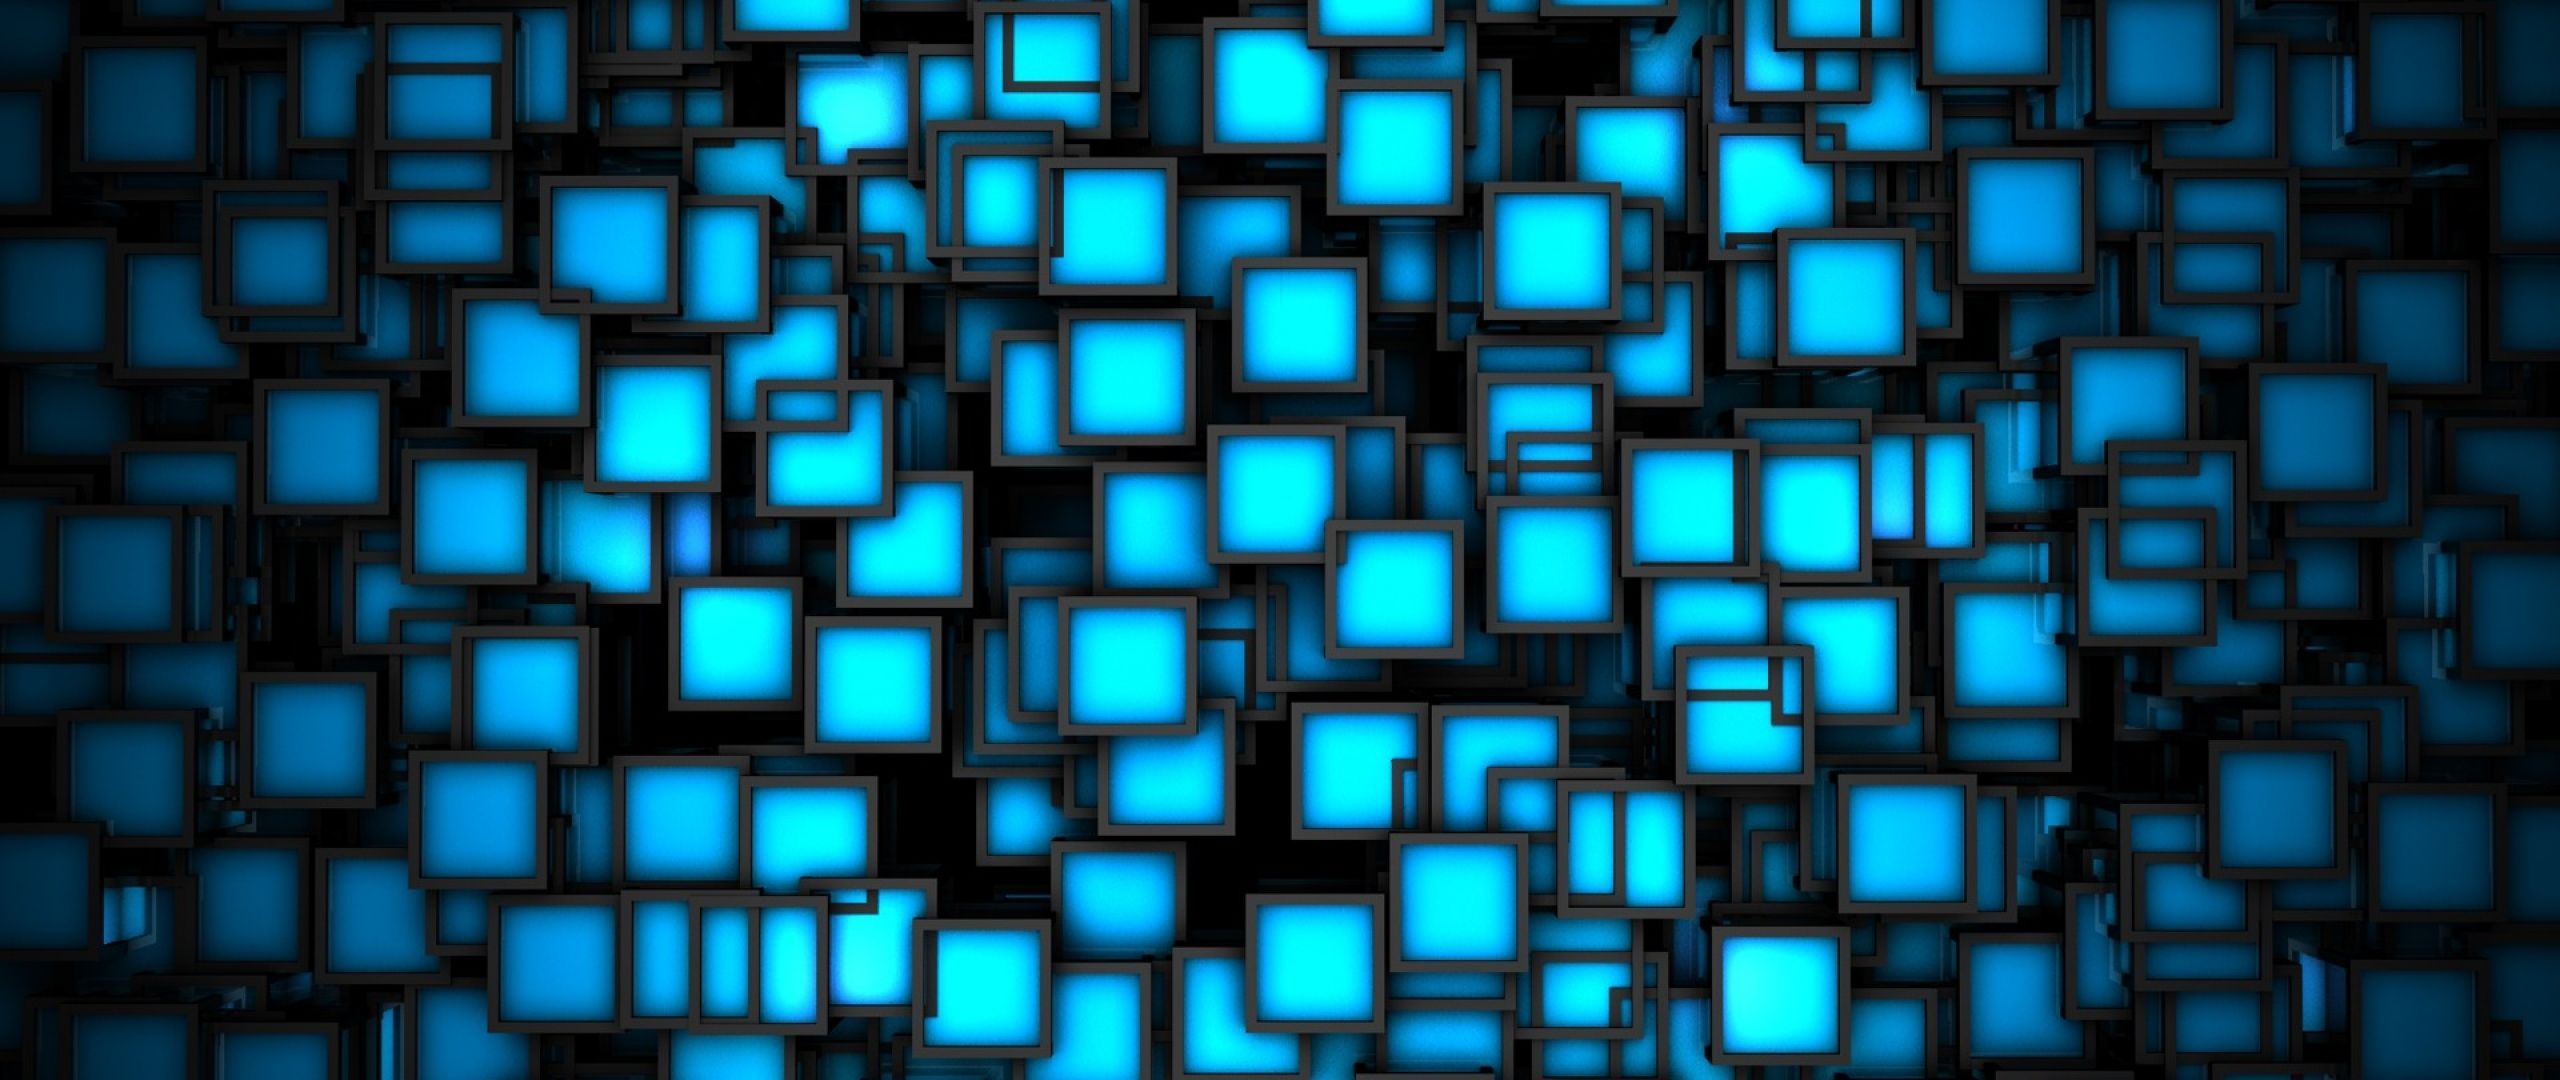 Download Wallpaper 2560x1080 Black, Blue, Bright, Squares